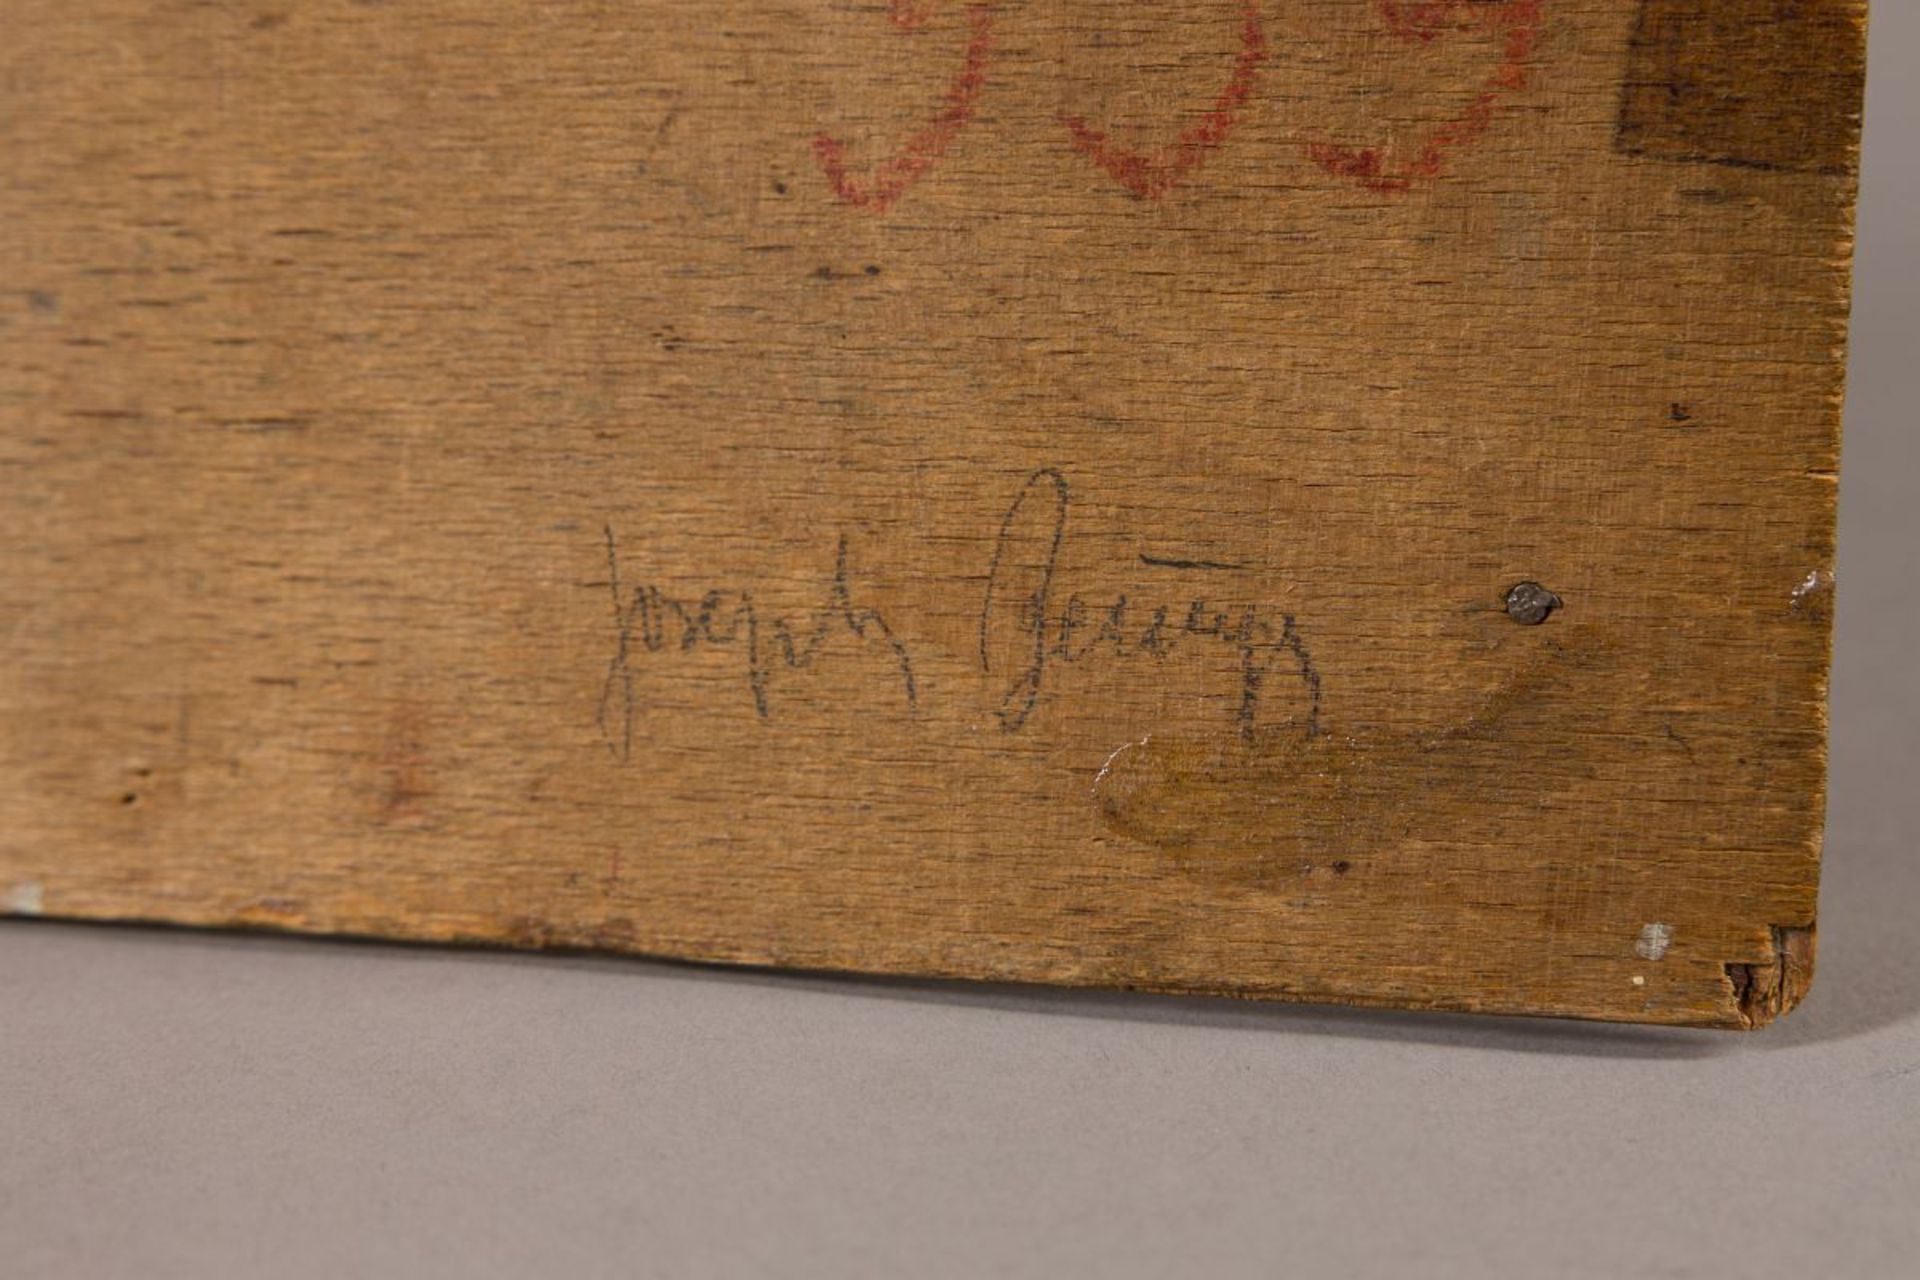 Beuys (zugeschrieben), Joseph(1921 - 1986)Fragilewooden objectsigned lower rightH: 10,7 in / W: 23,4 - Image 3 of 10